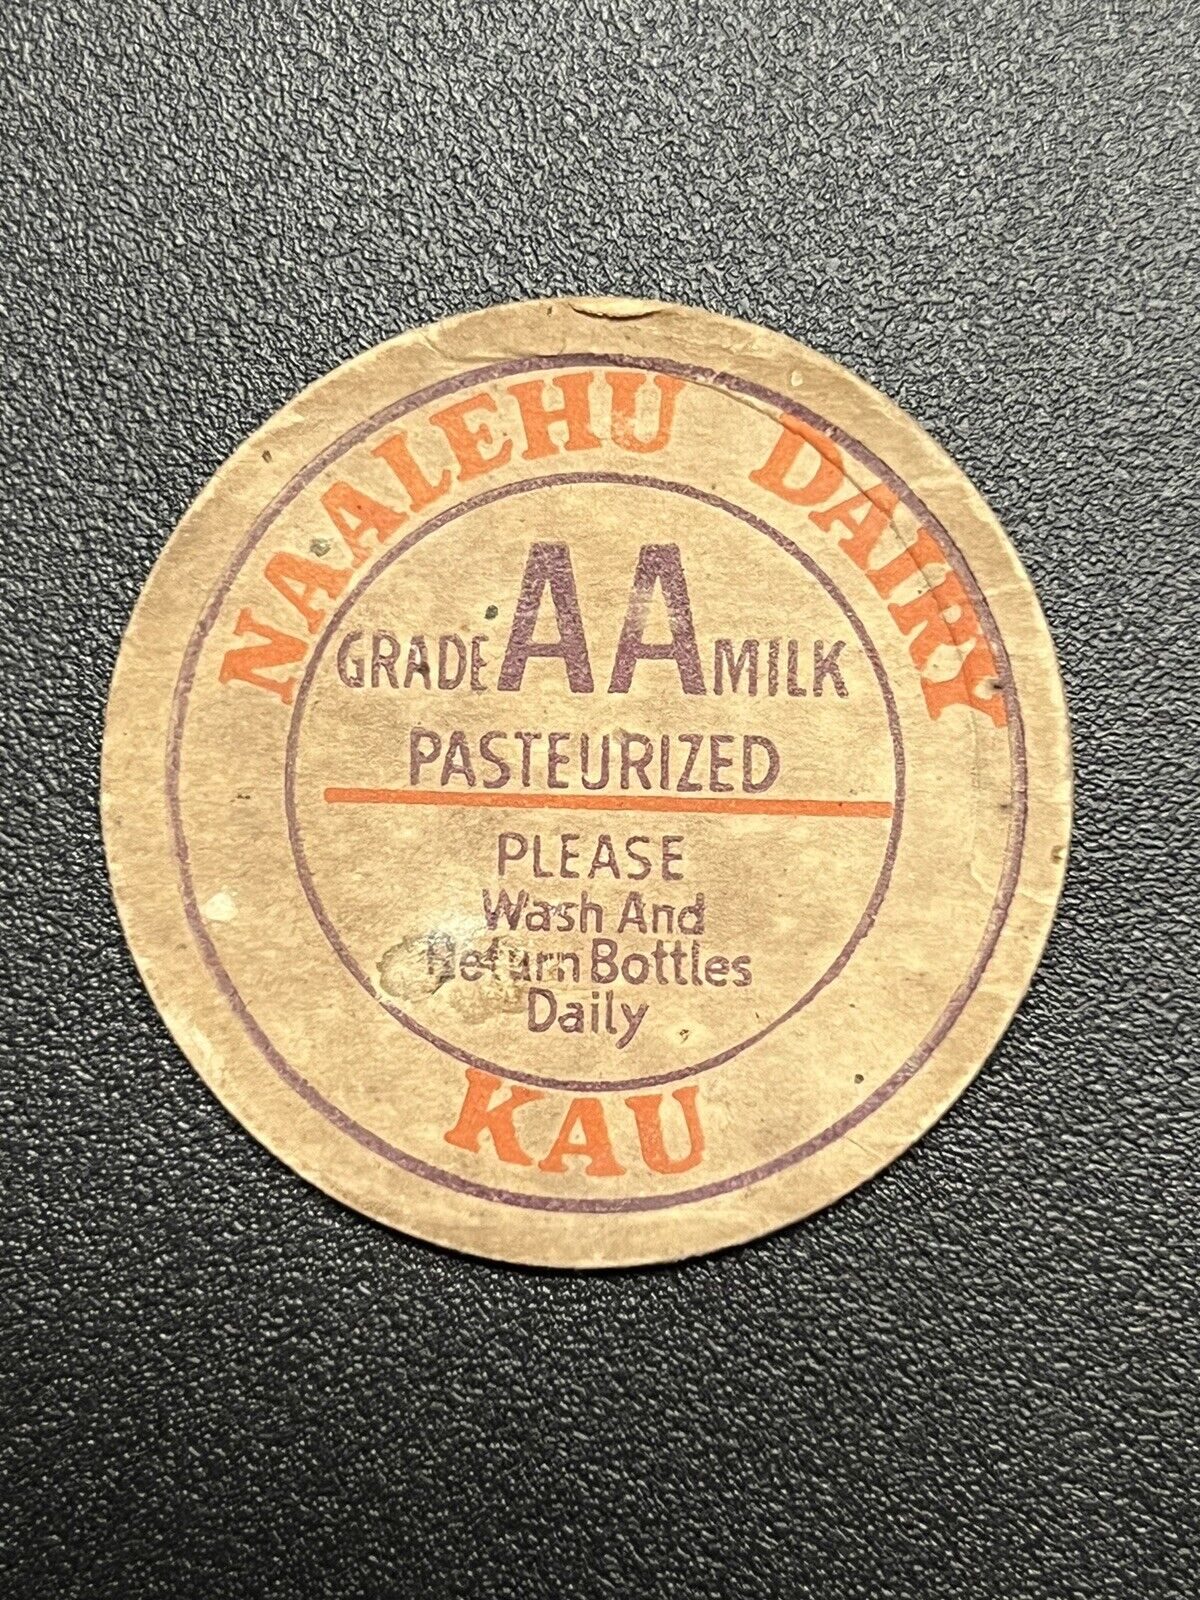 Hawaii Milk Cap - Naalehu Dairy Grade AA Pasteurized Milk Kau